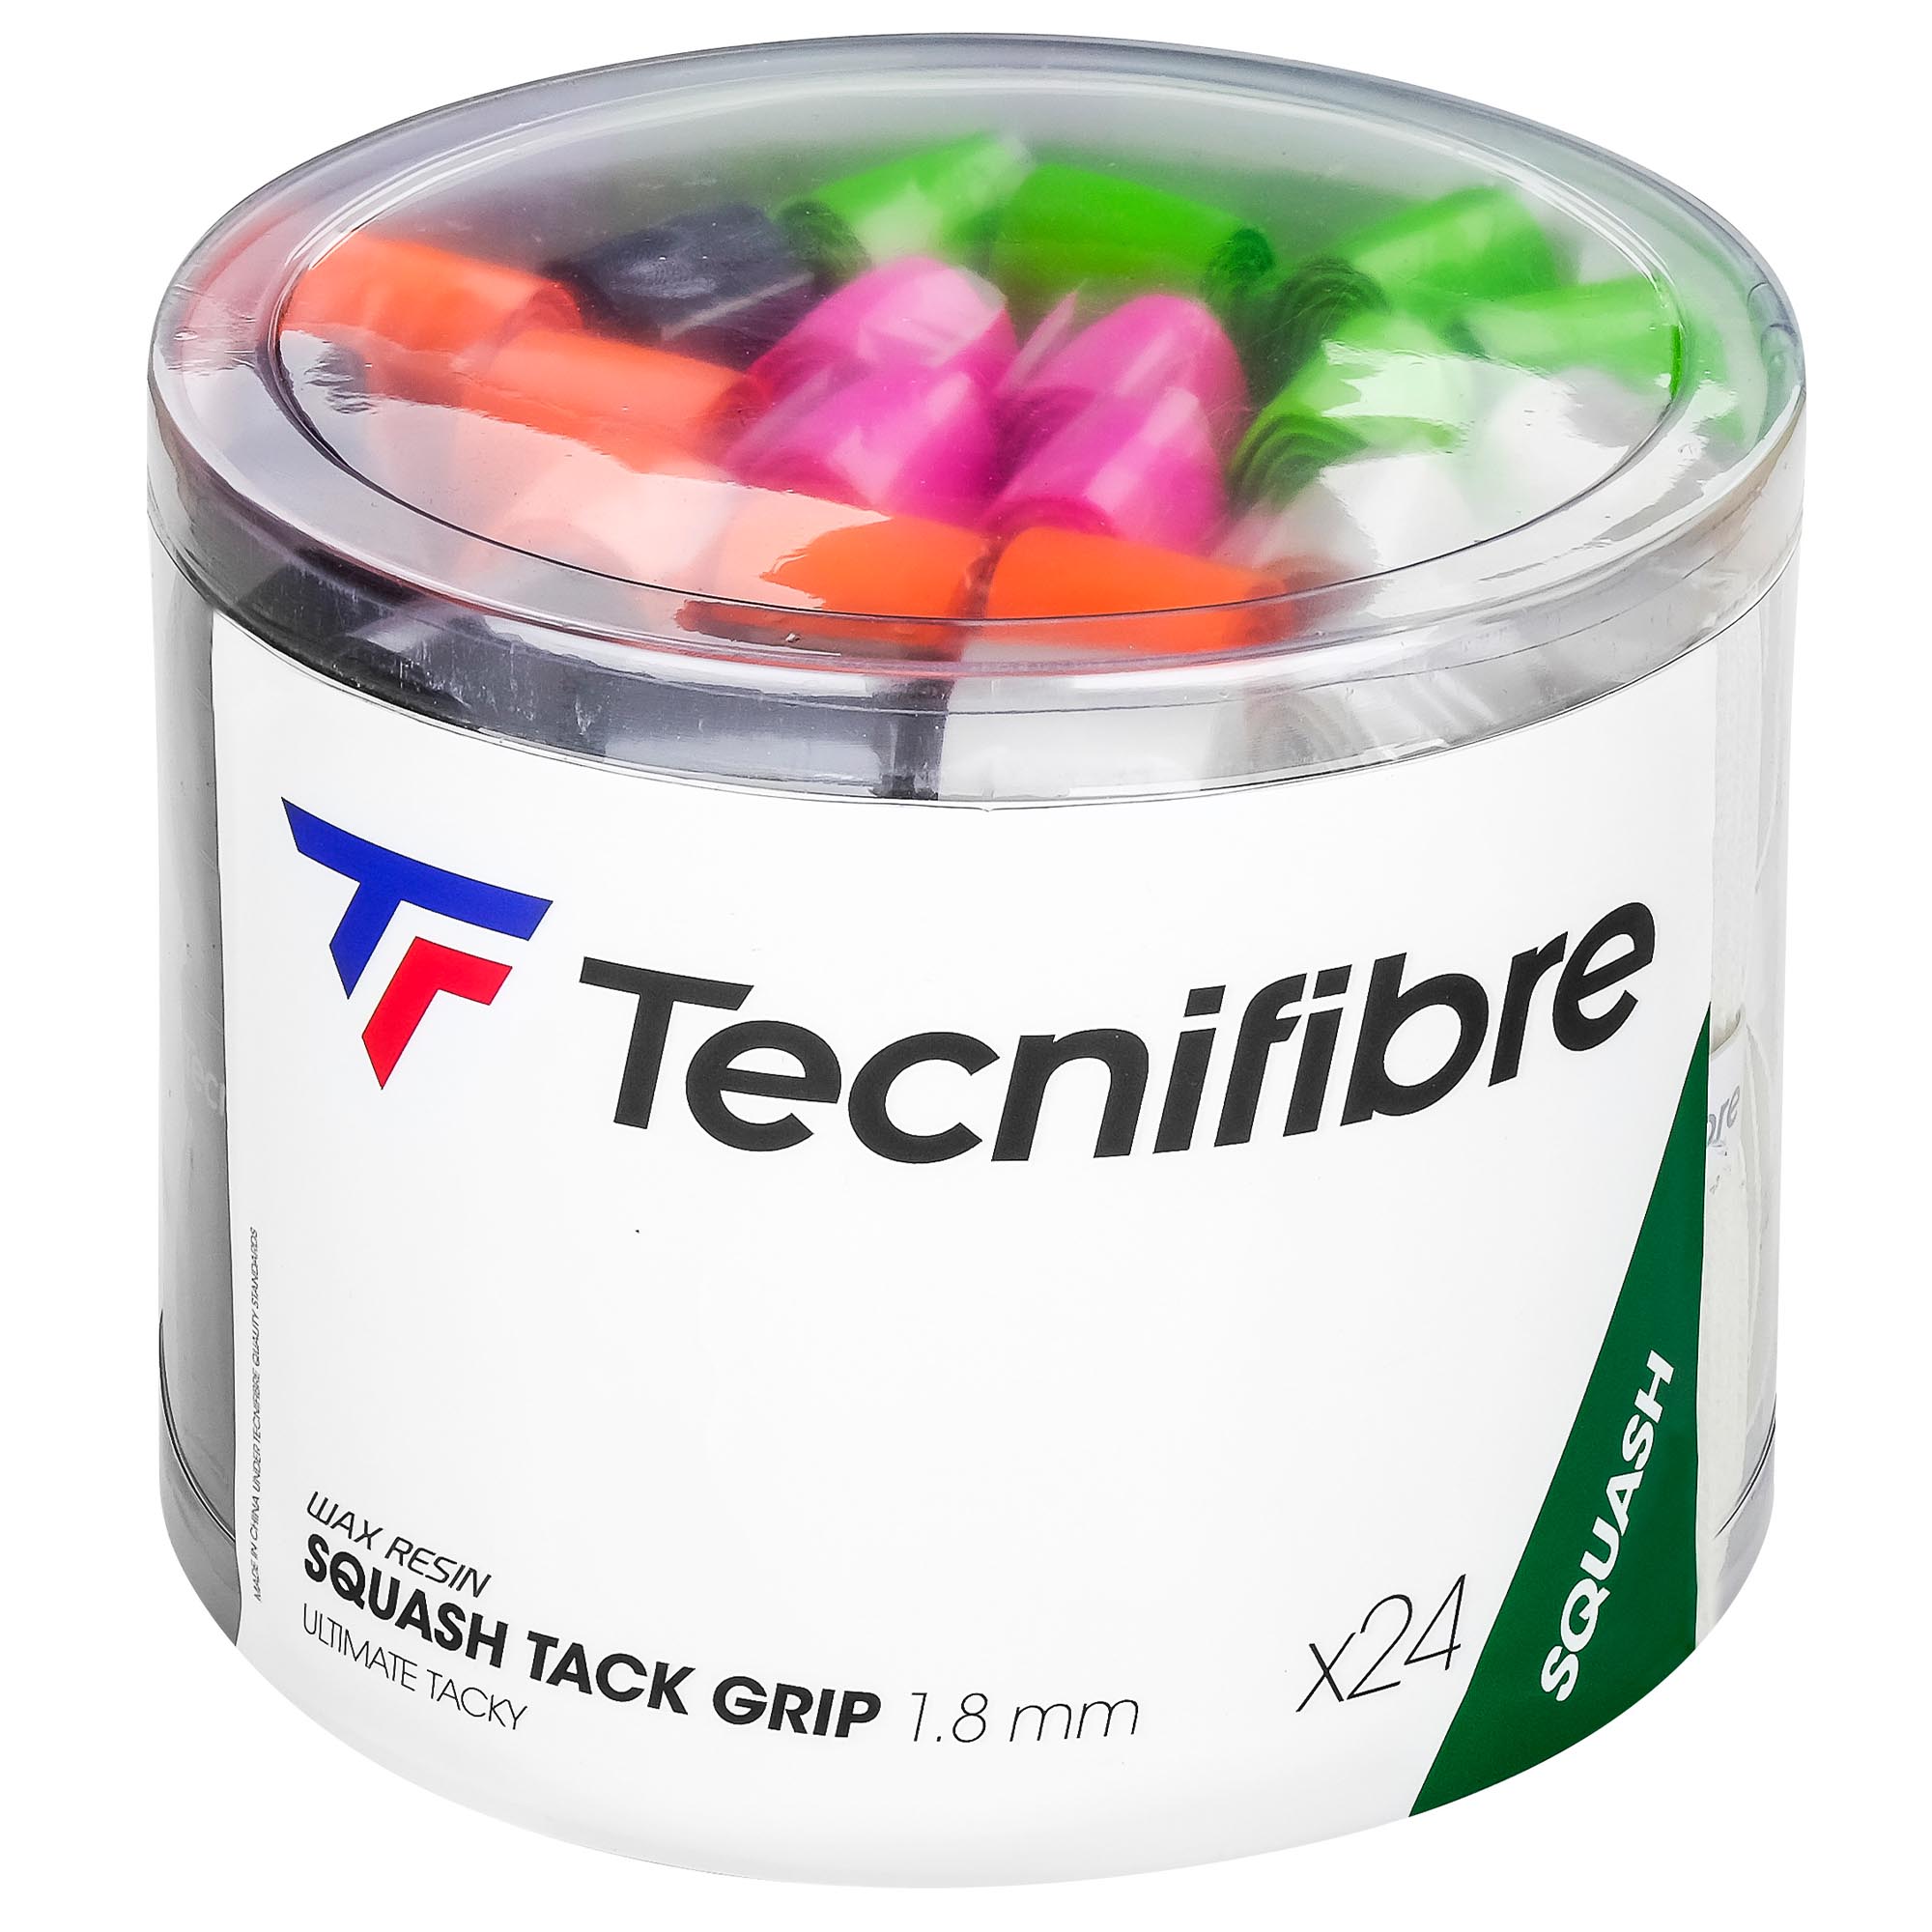 Tecnifibre Squash Tacky Replacement Grip - Box of 24